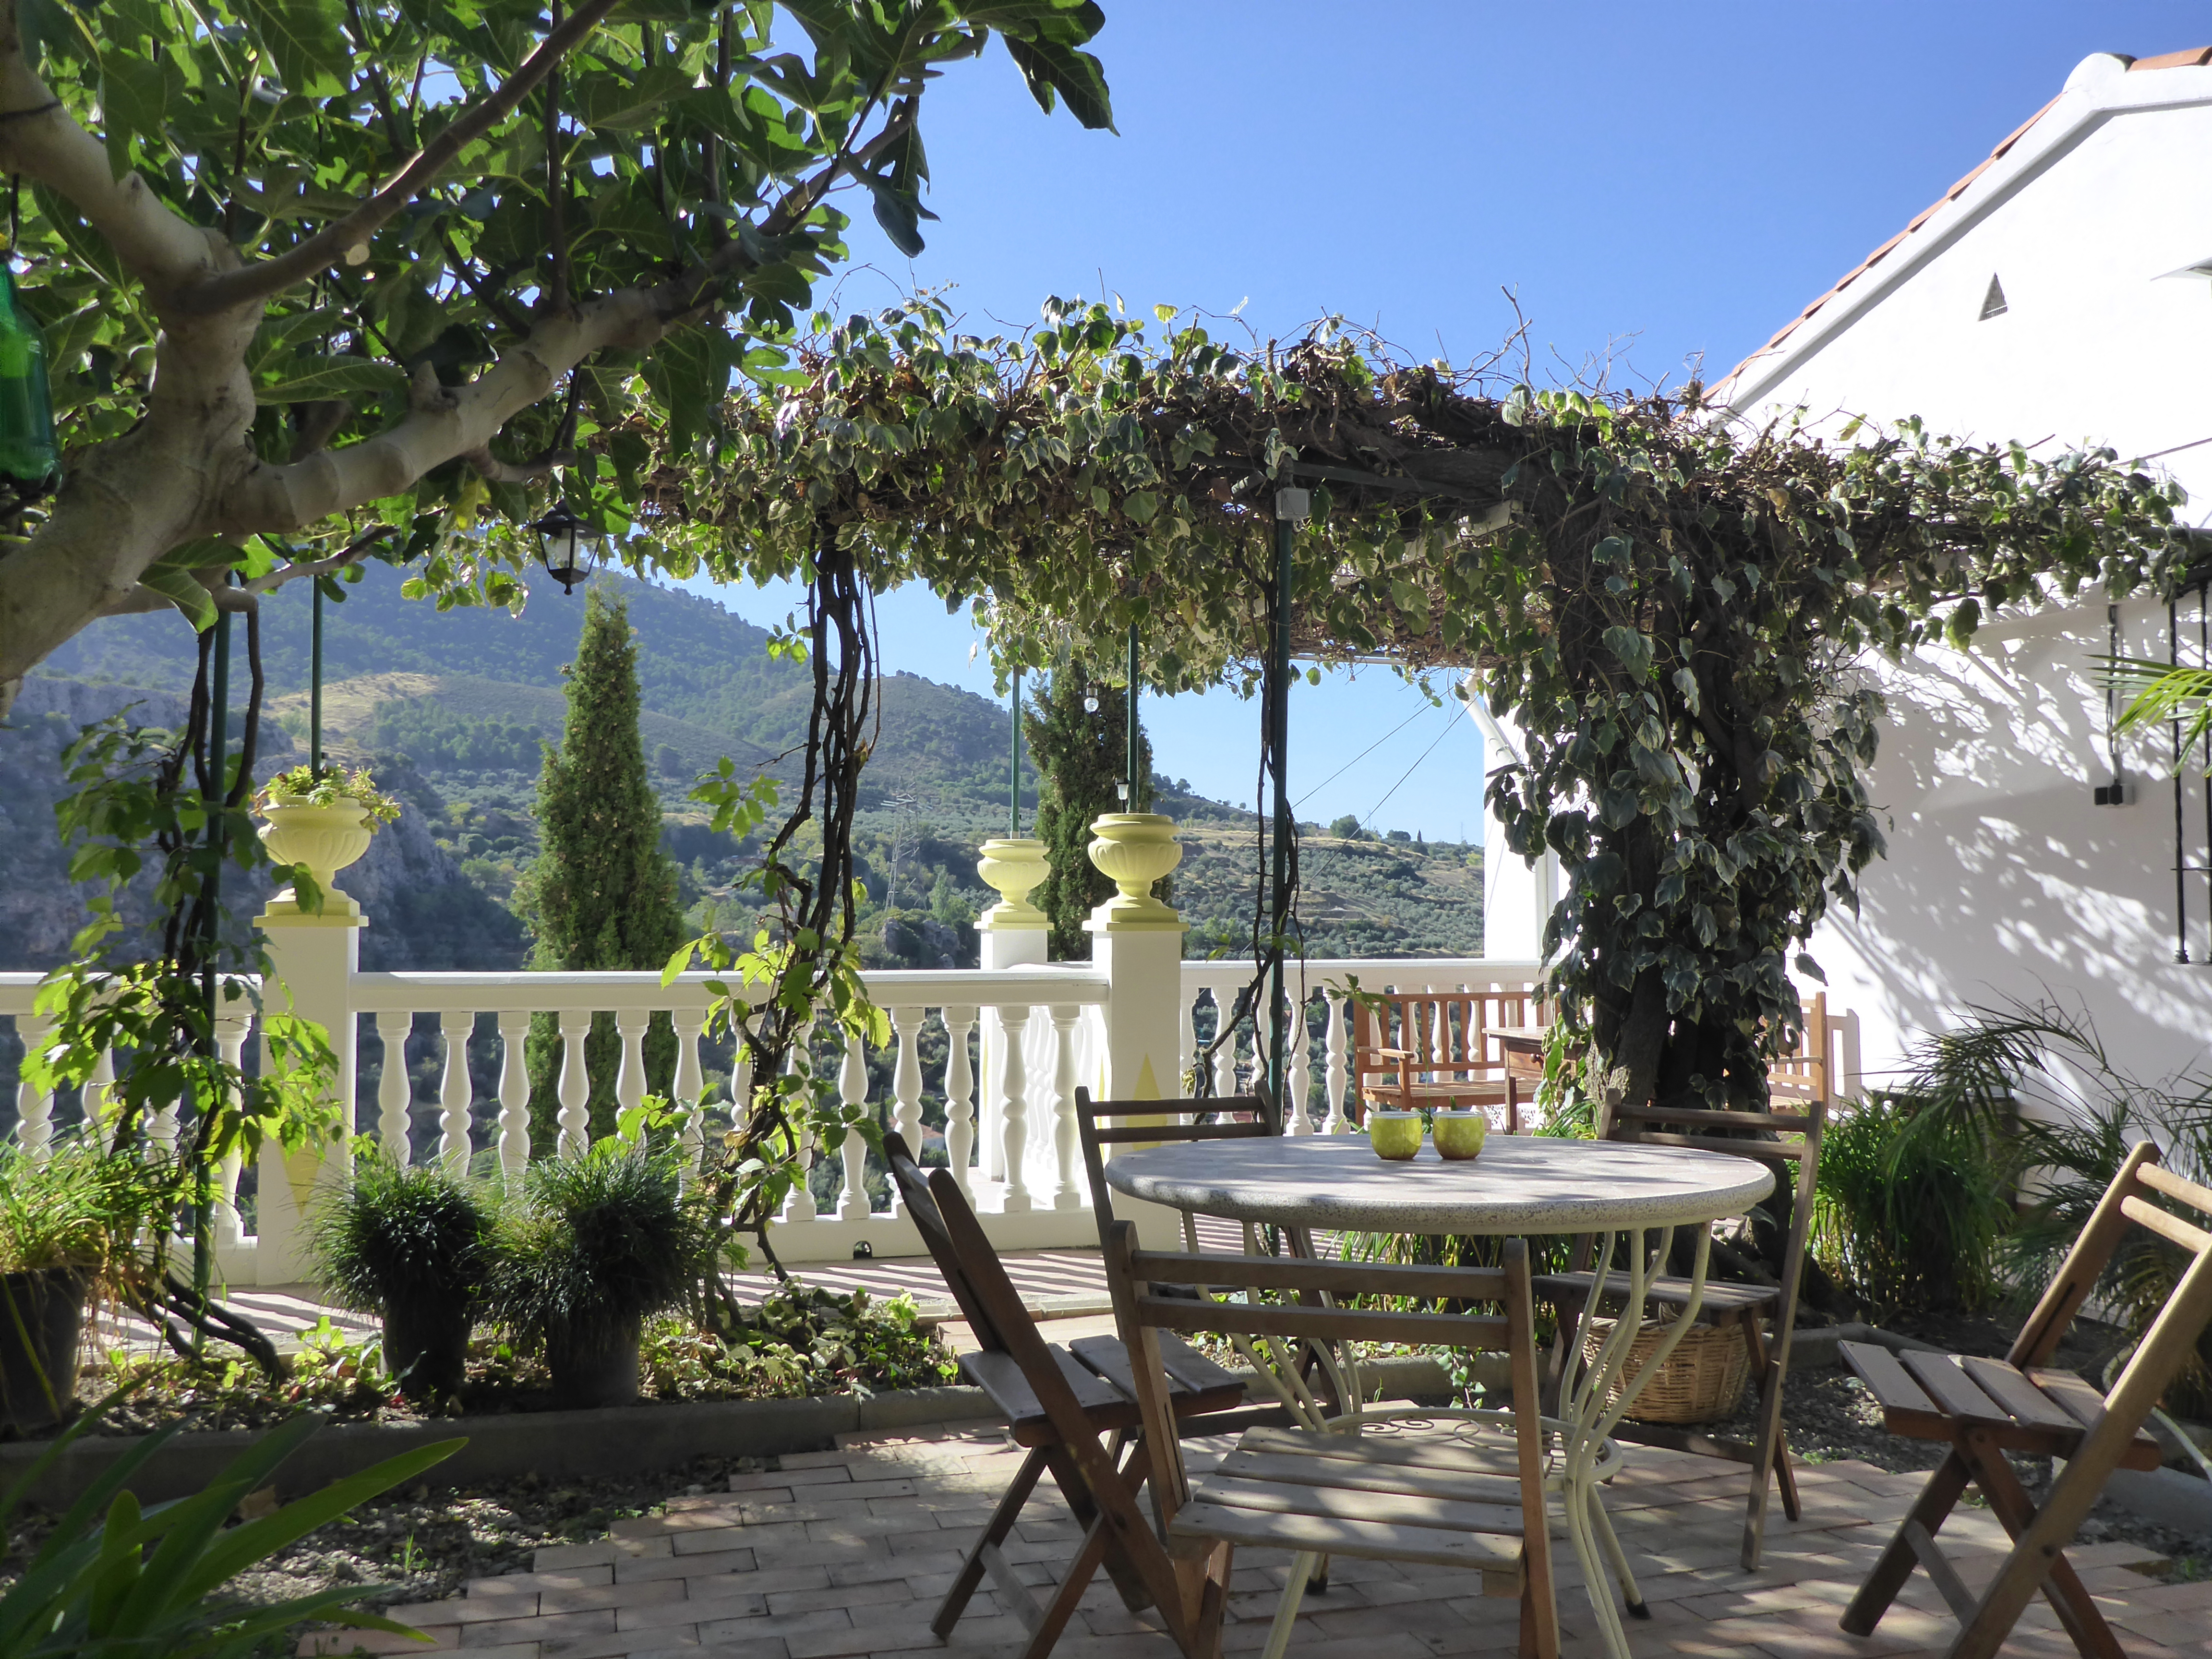 The terrace at the Solana de Granada guesthouse